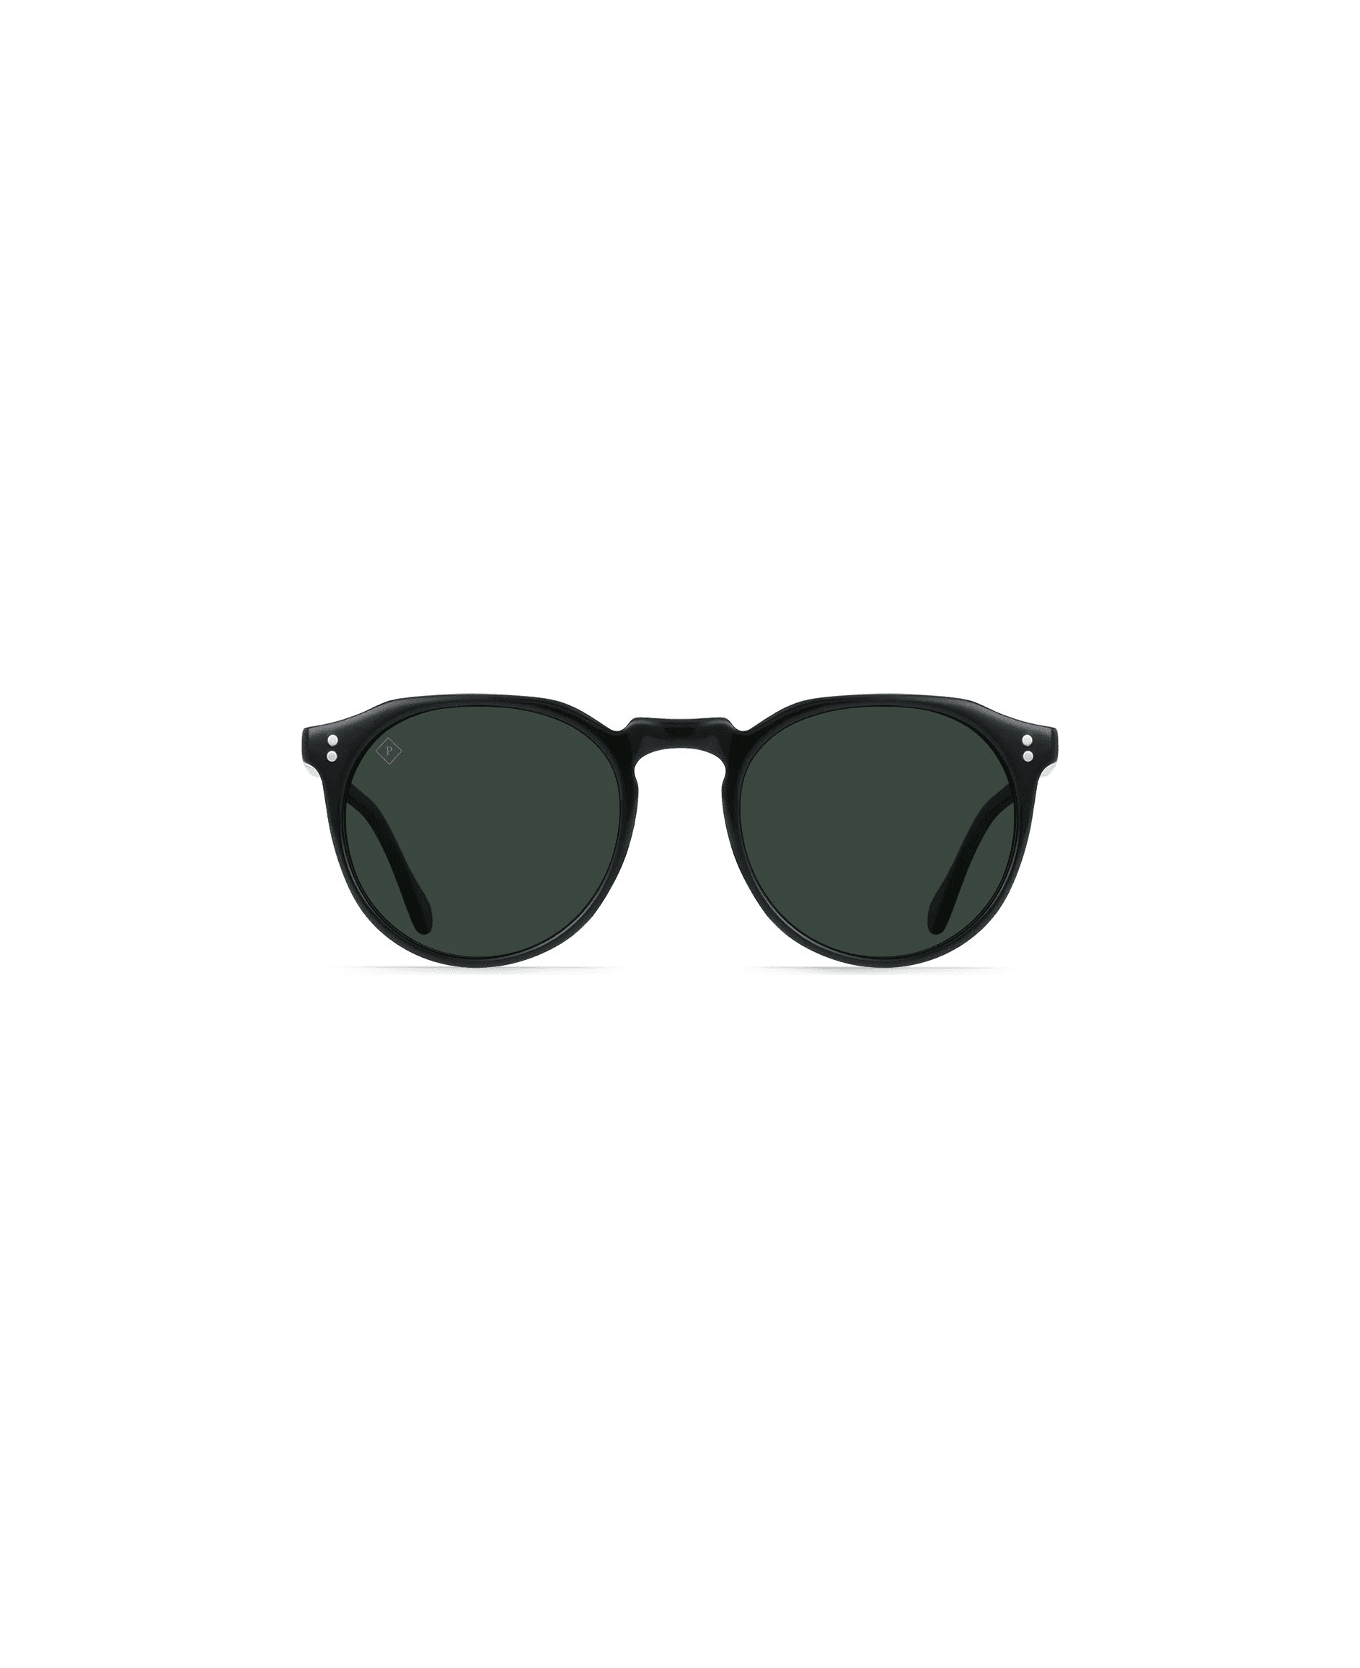 Raen Remmy crystal black 49 Sunglasses - Crystal black